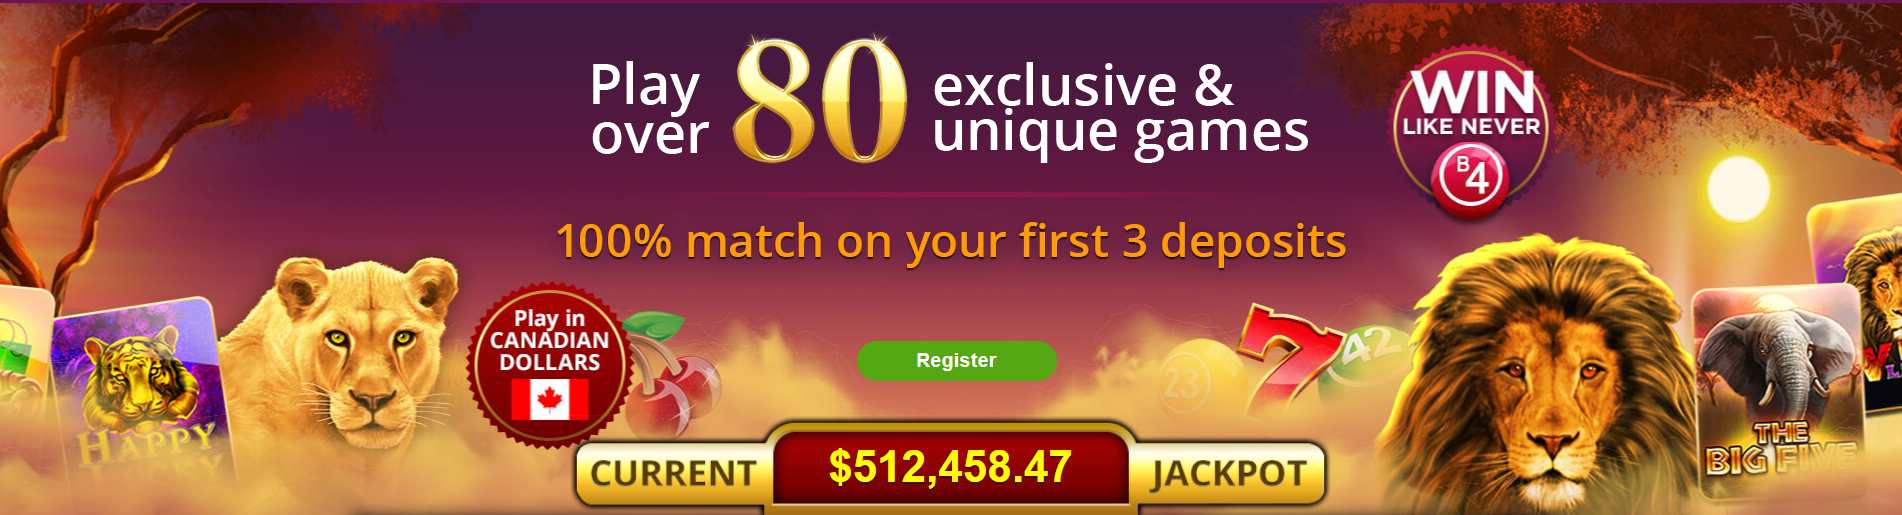 HighFlyer Casino Welcome Offer